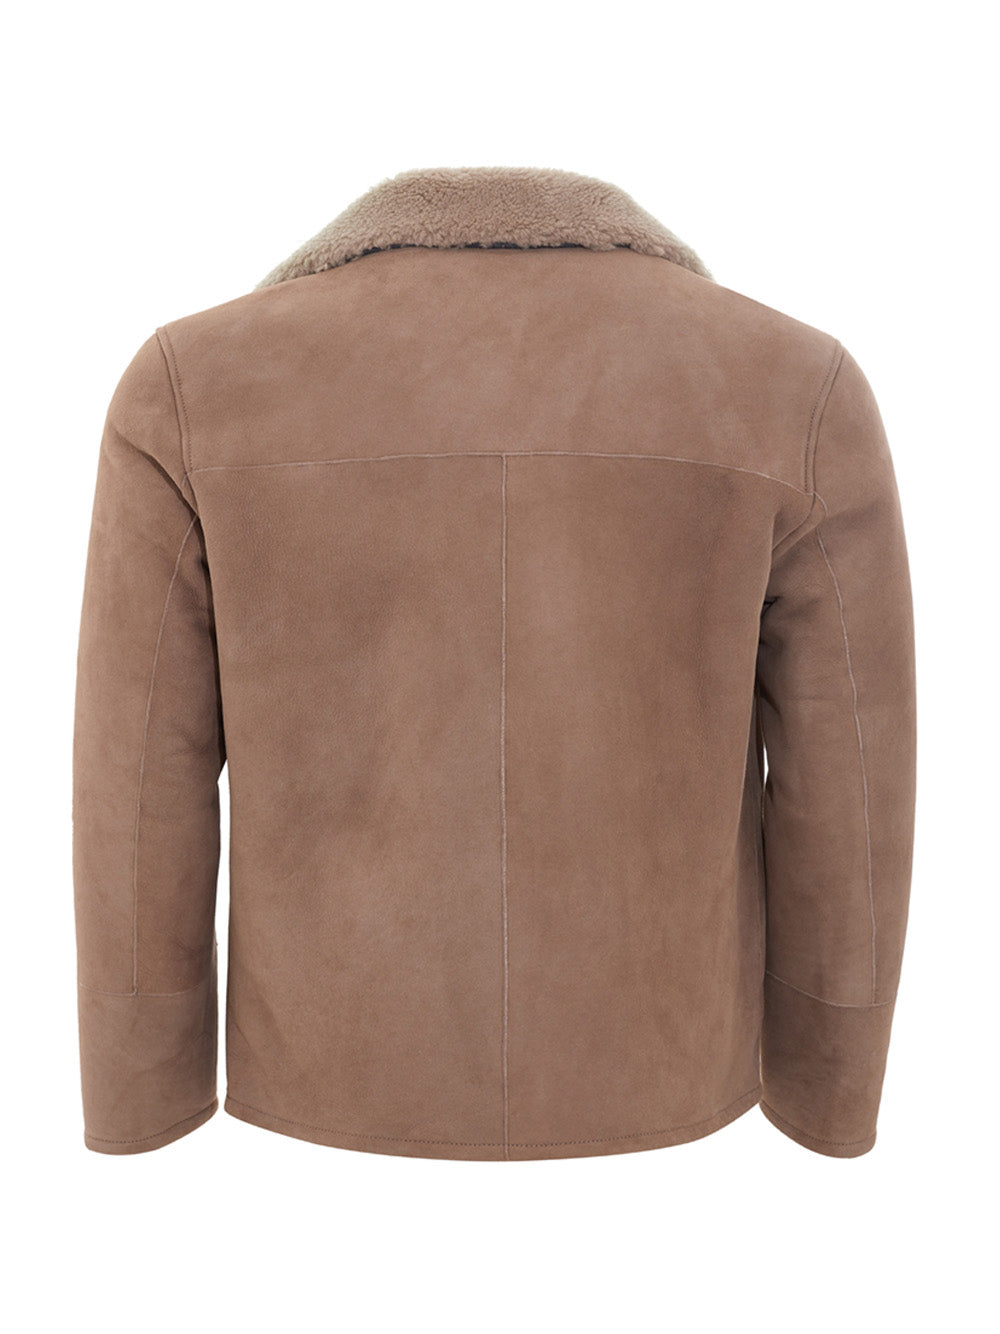 Herno Brown Sheepskin Jacket